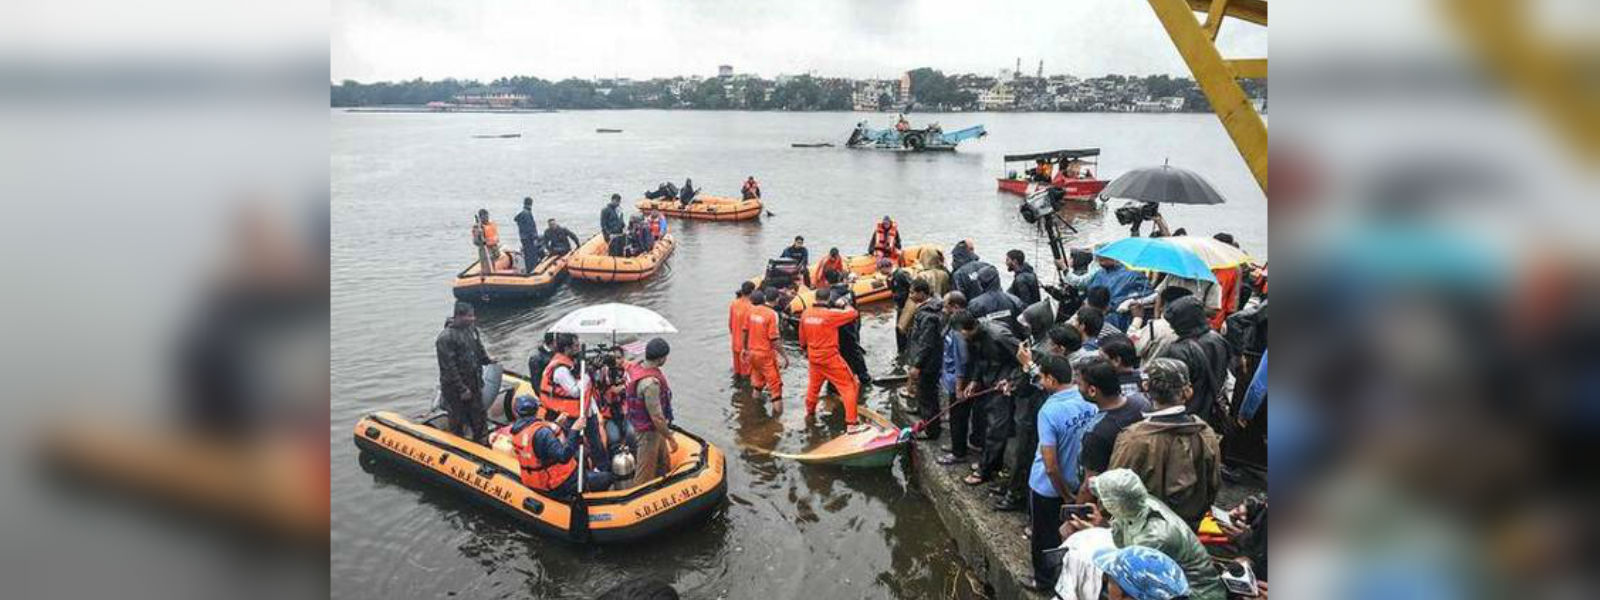 Boat capsized in India